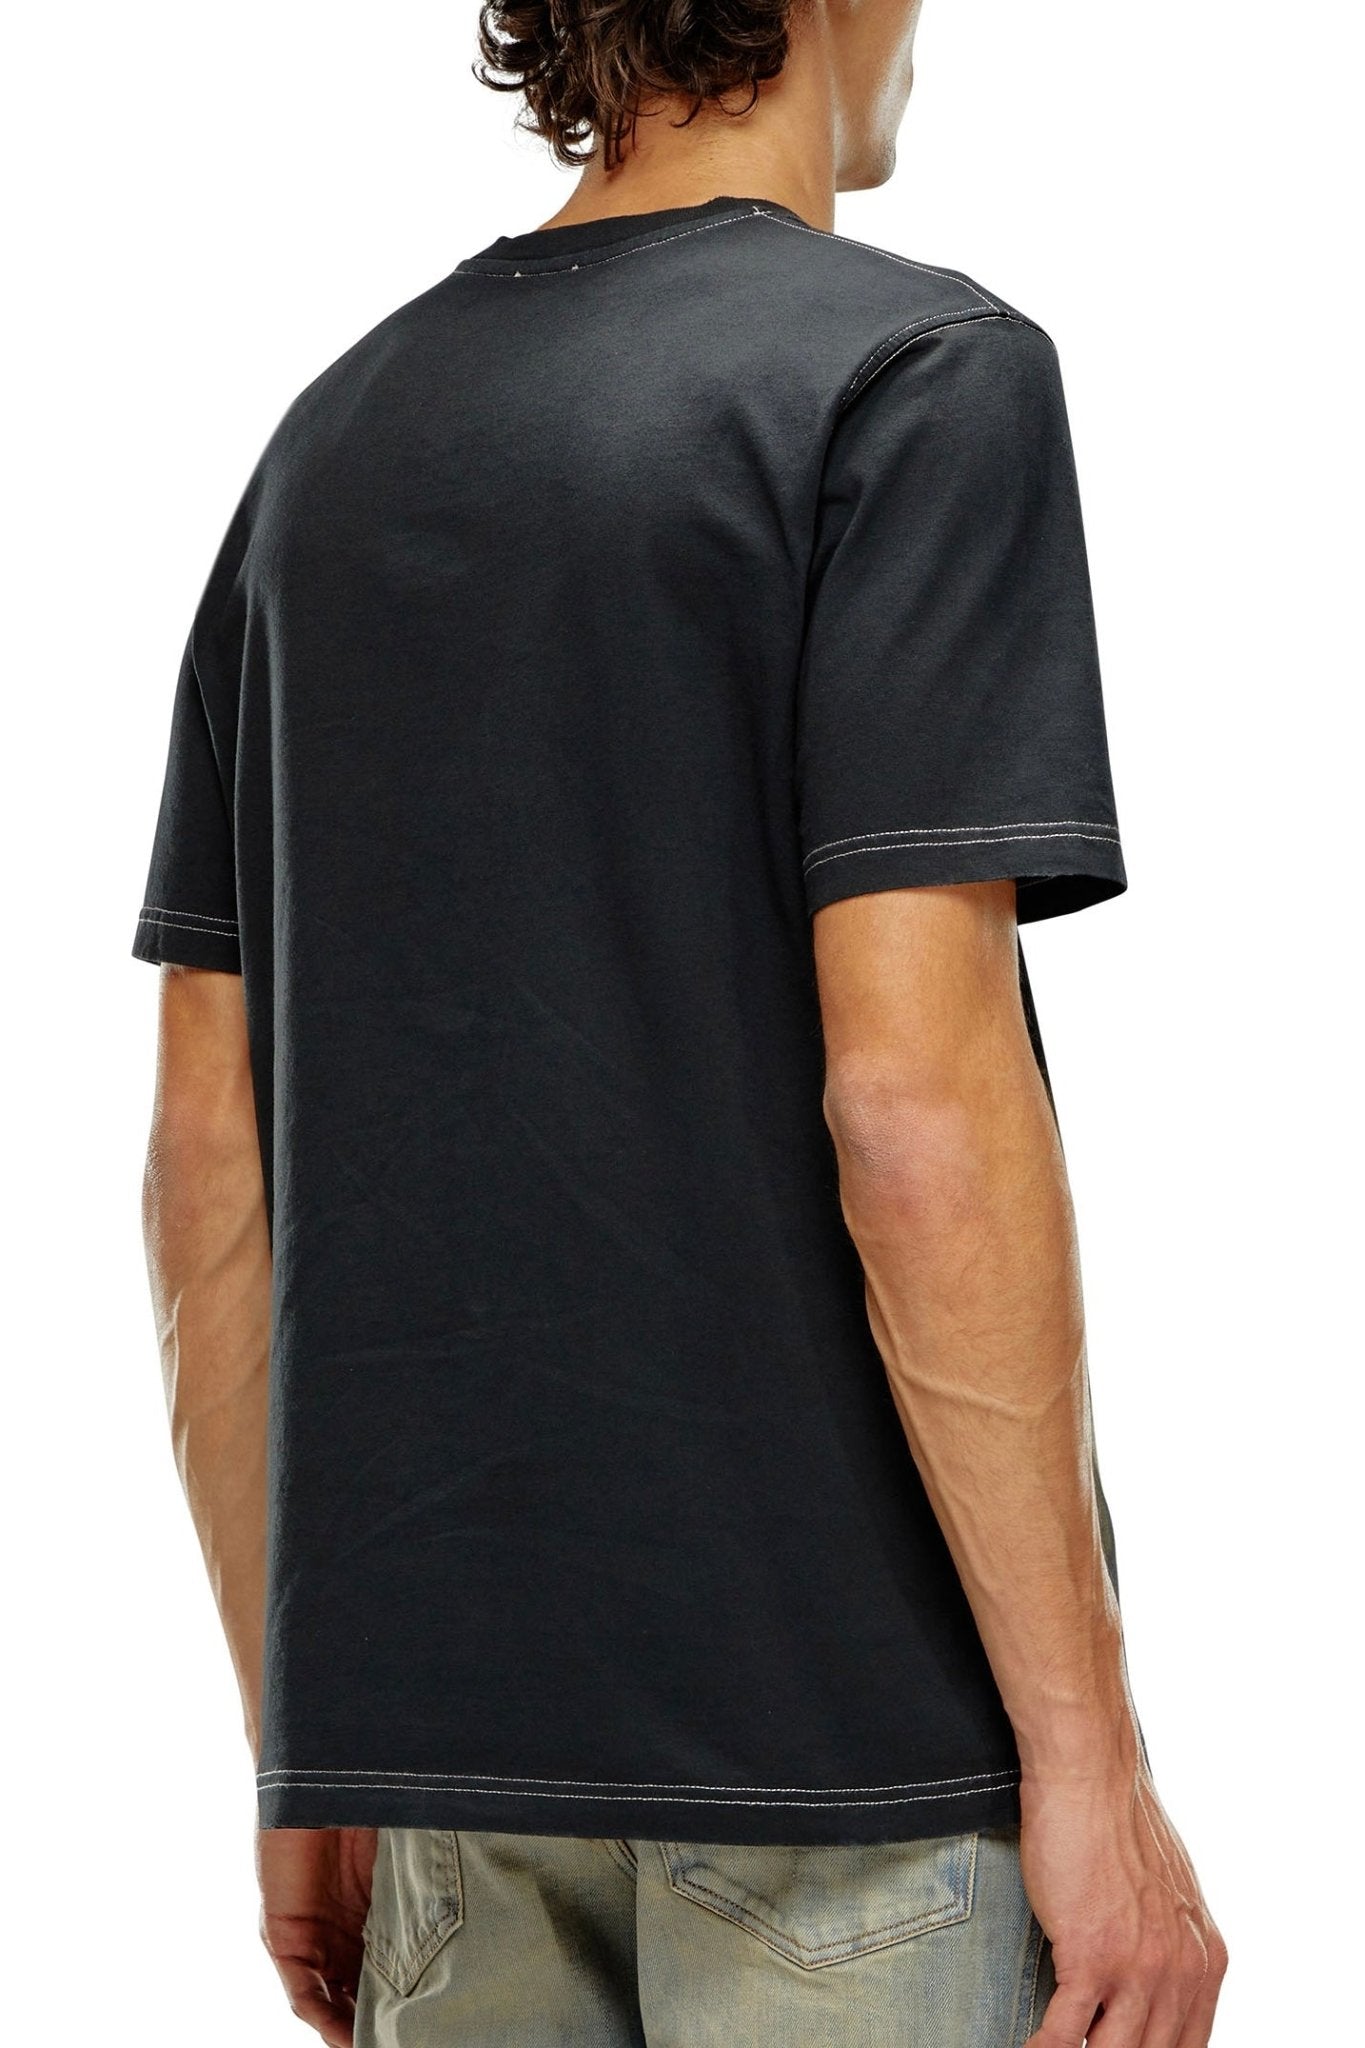 Man wearing a plain black cotton jersey DIESEL pT-JUST-N13 T-SHIRT BLACK Men's T-shirt, viewed from the back.